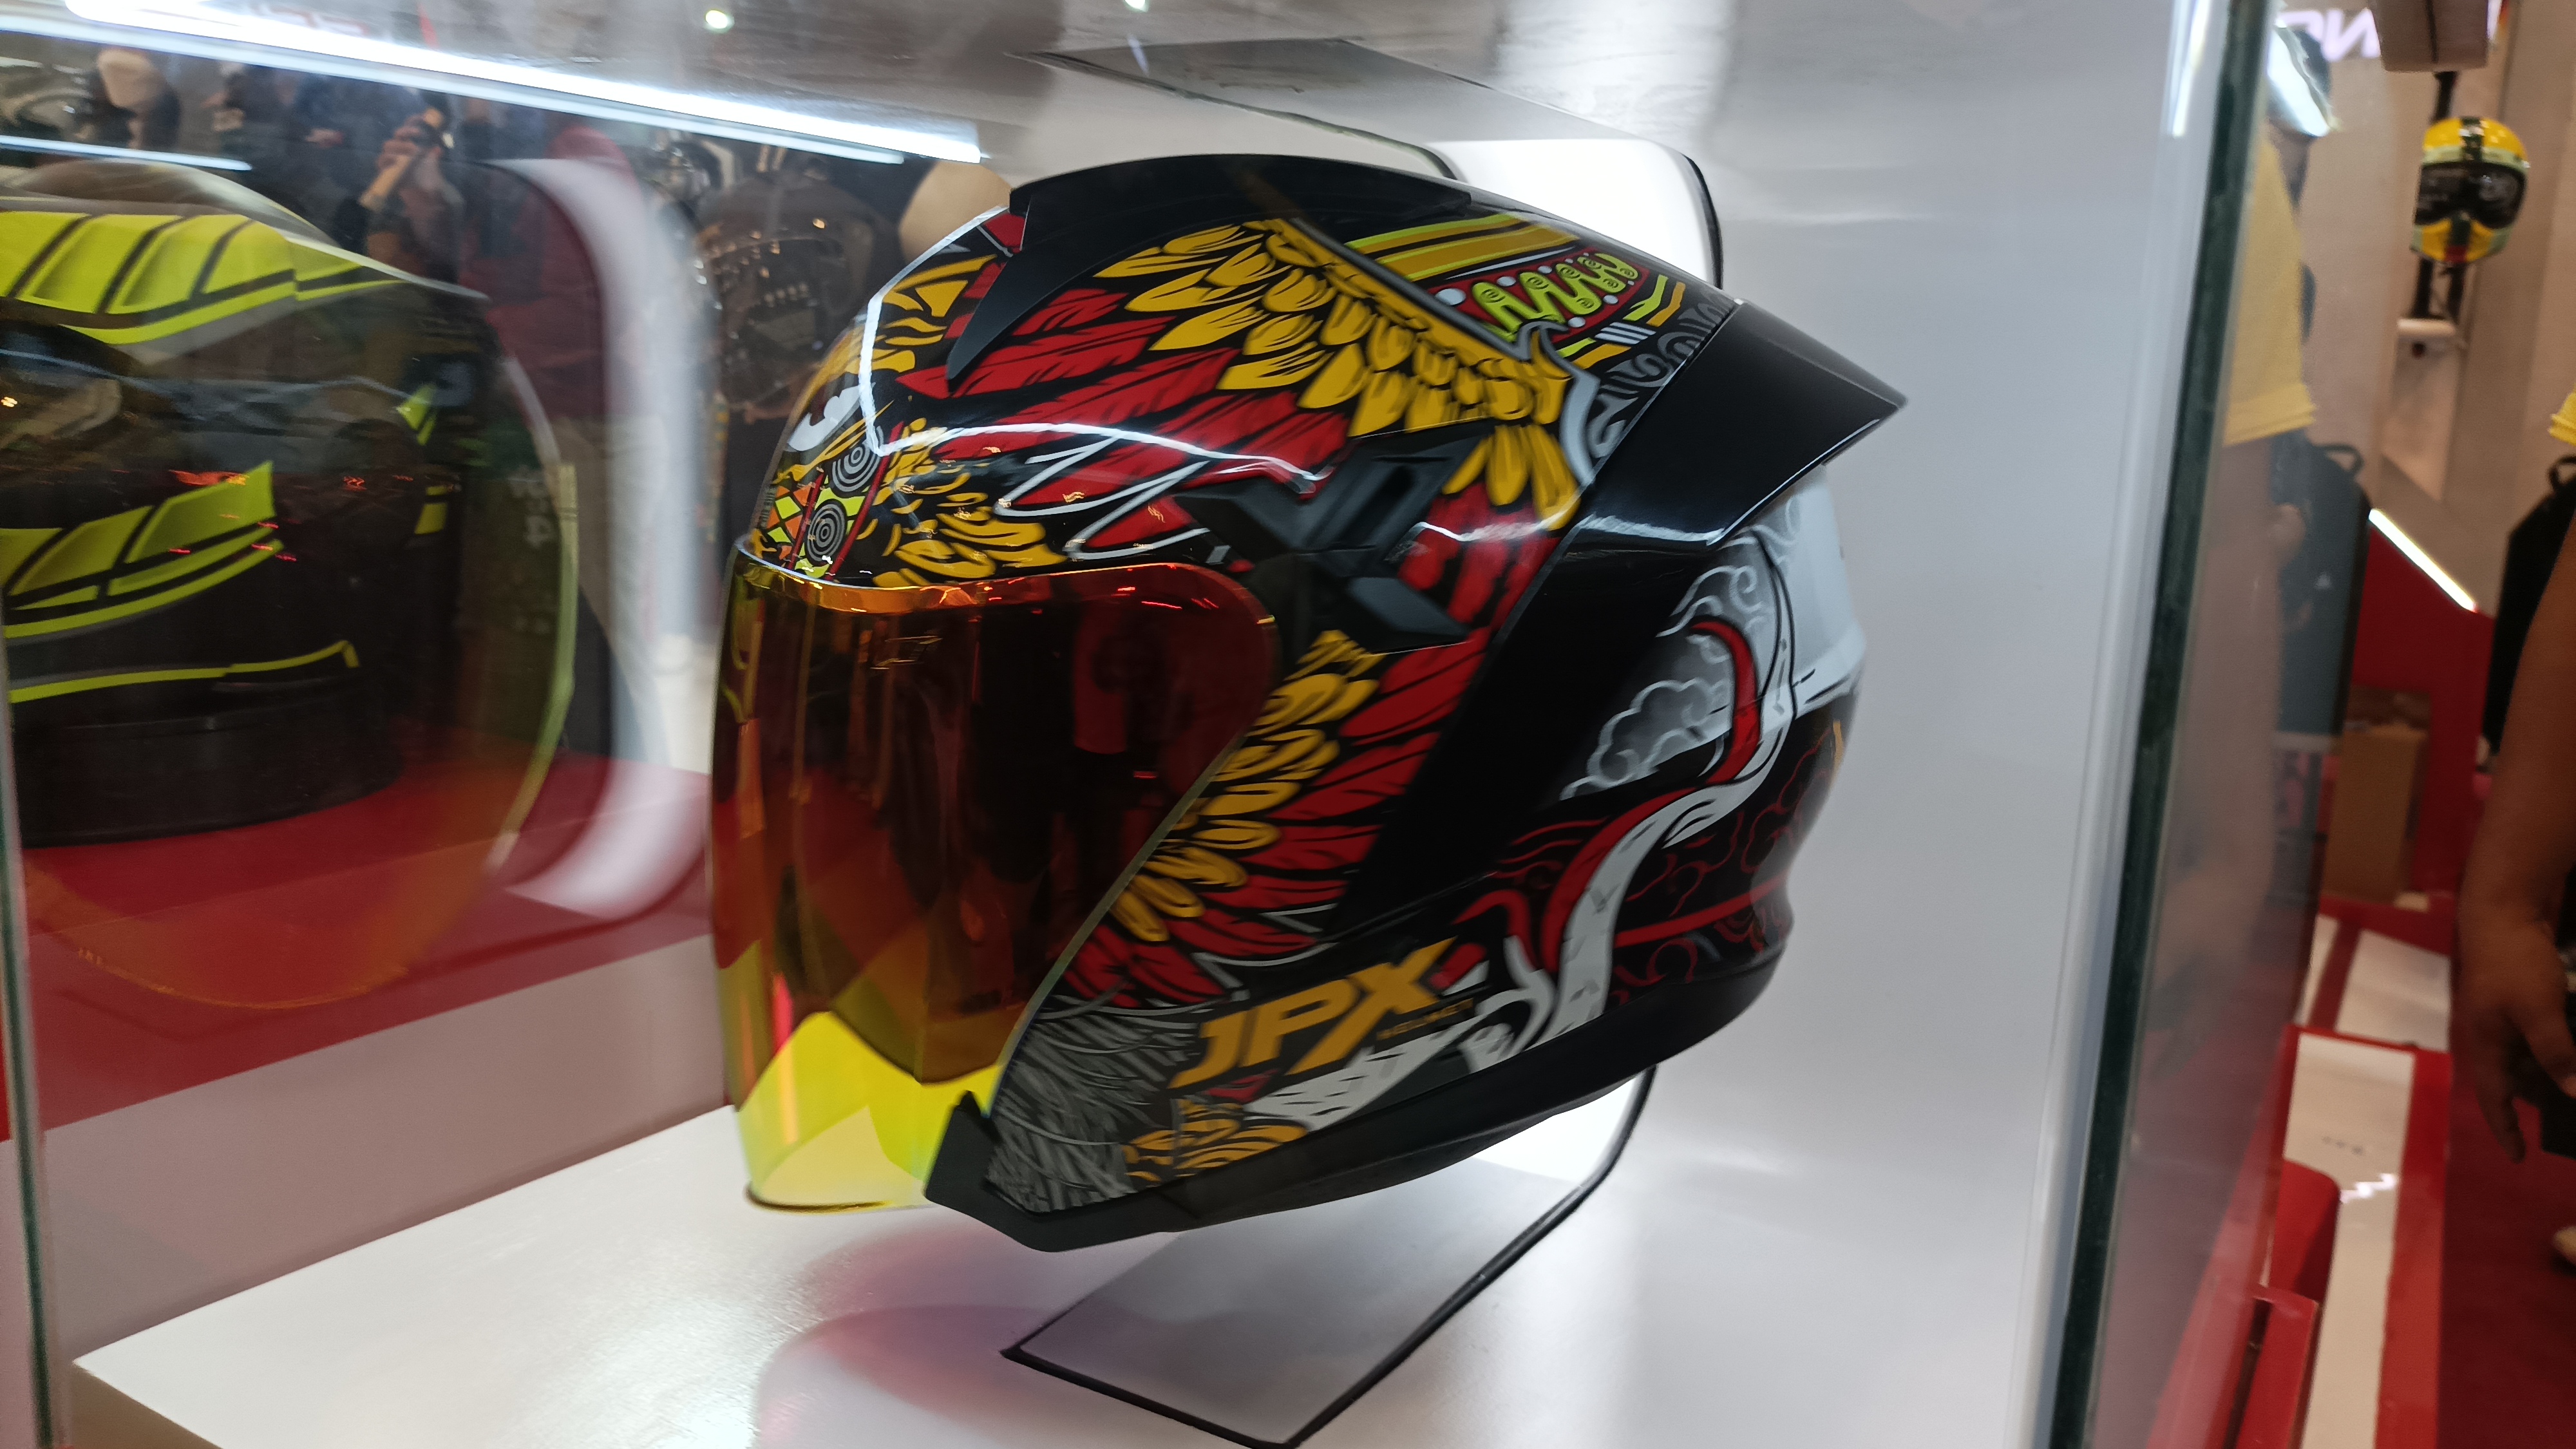 JPX Luncurkan Nova X, Helm Half Face Penuh Fitur dengan Desain Aerodinamis, Cuma Rp 750 Ribuan